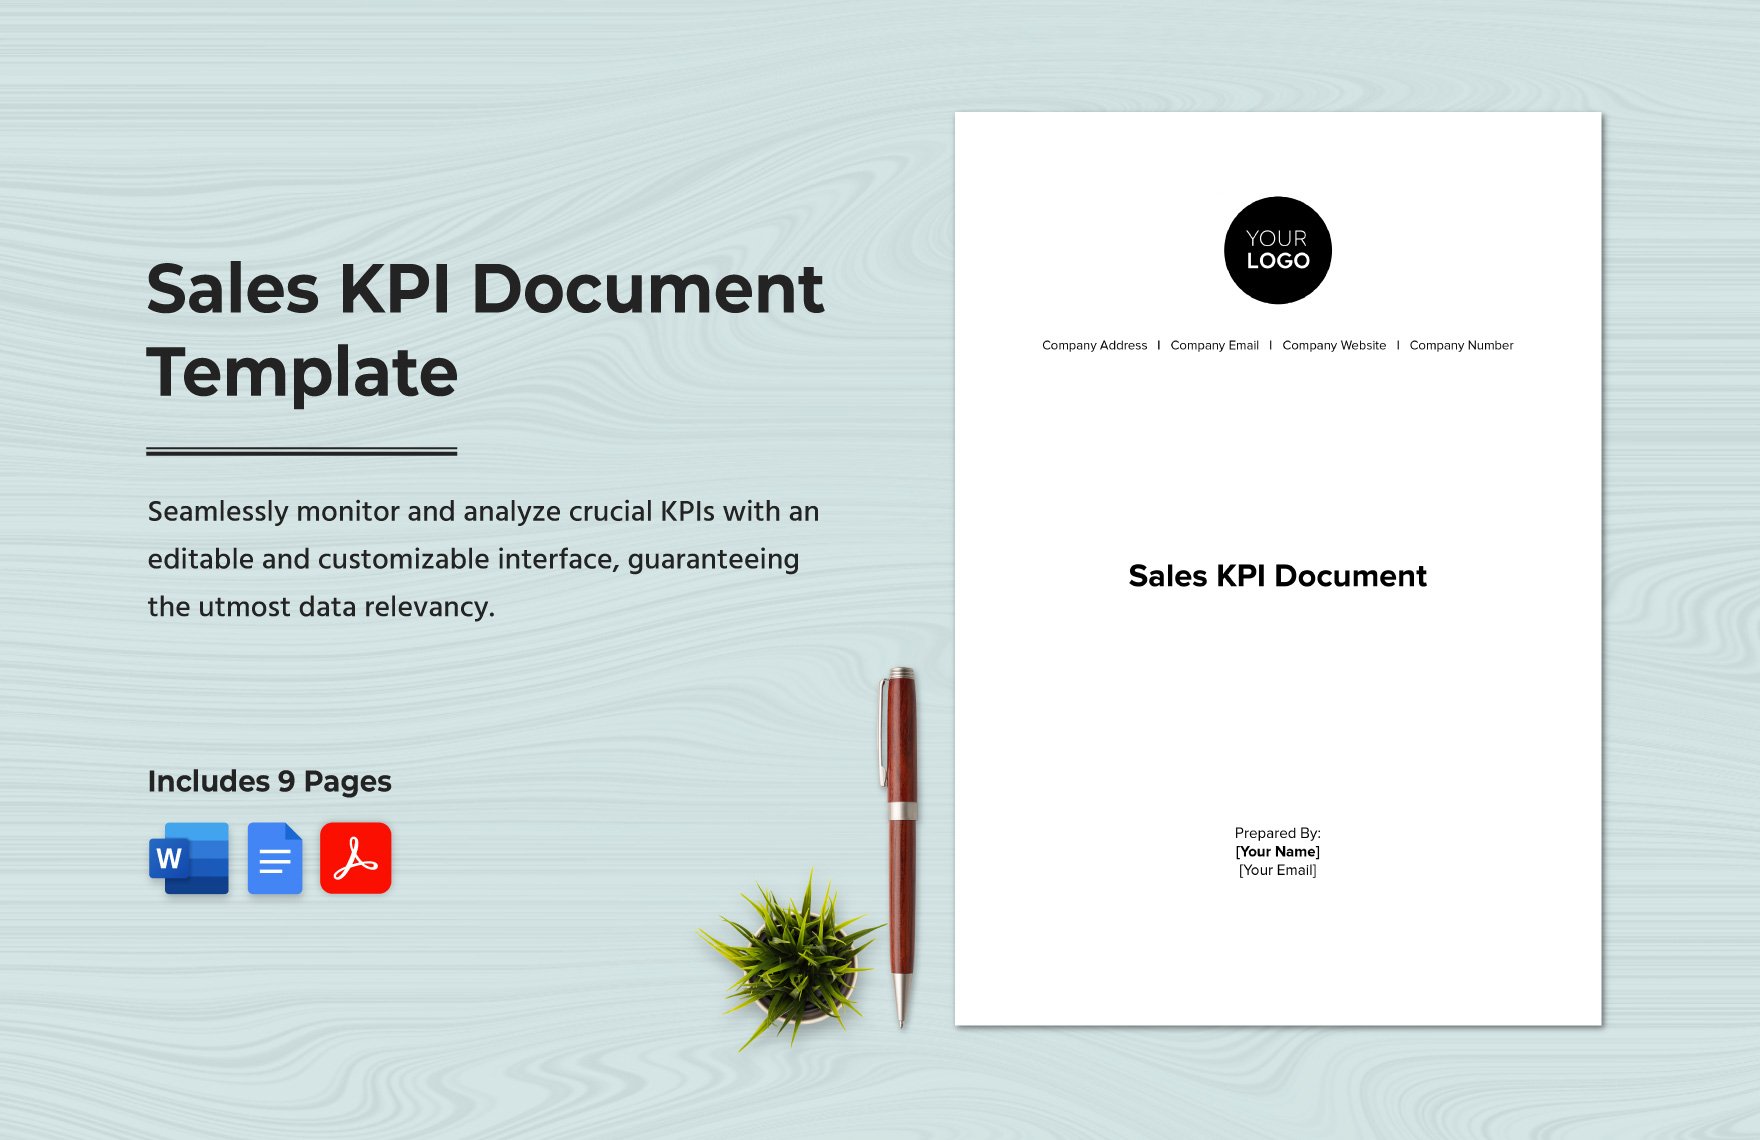 Sales KPI Document Template